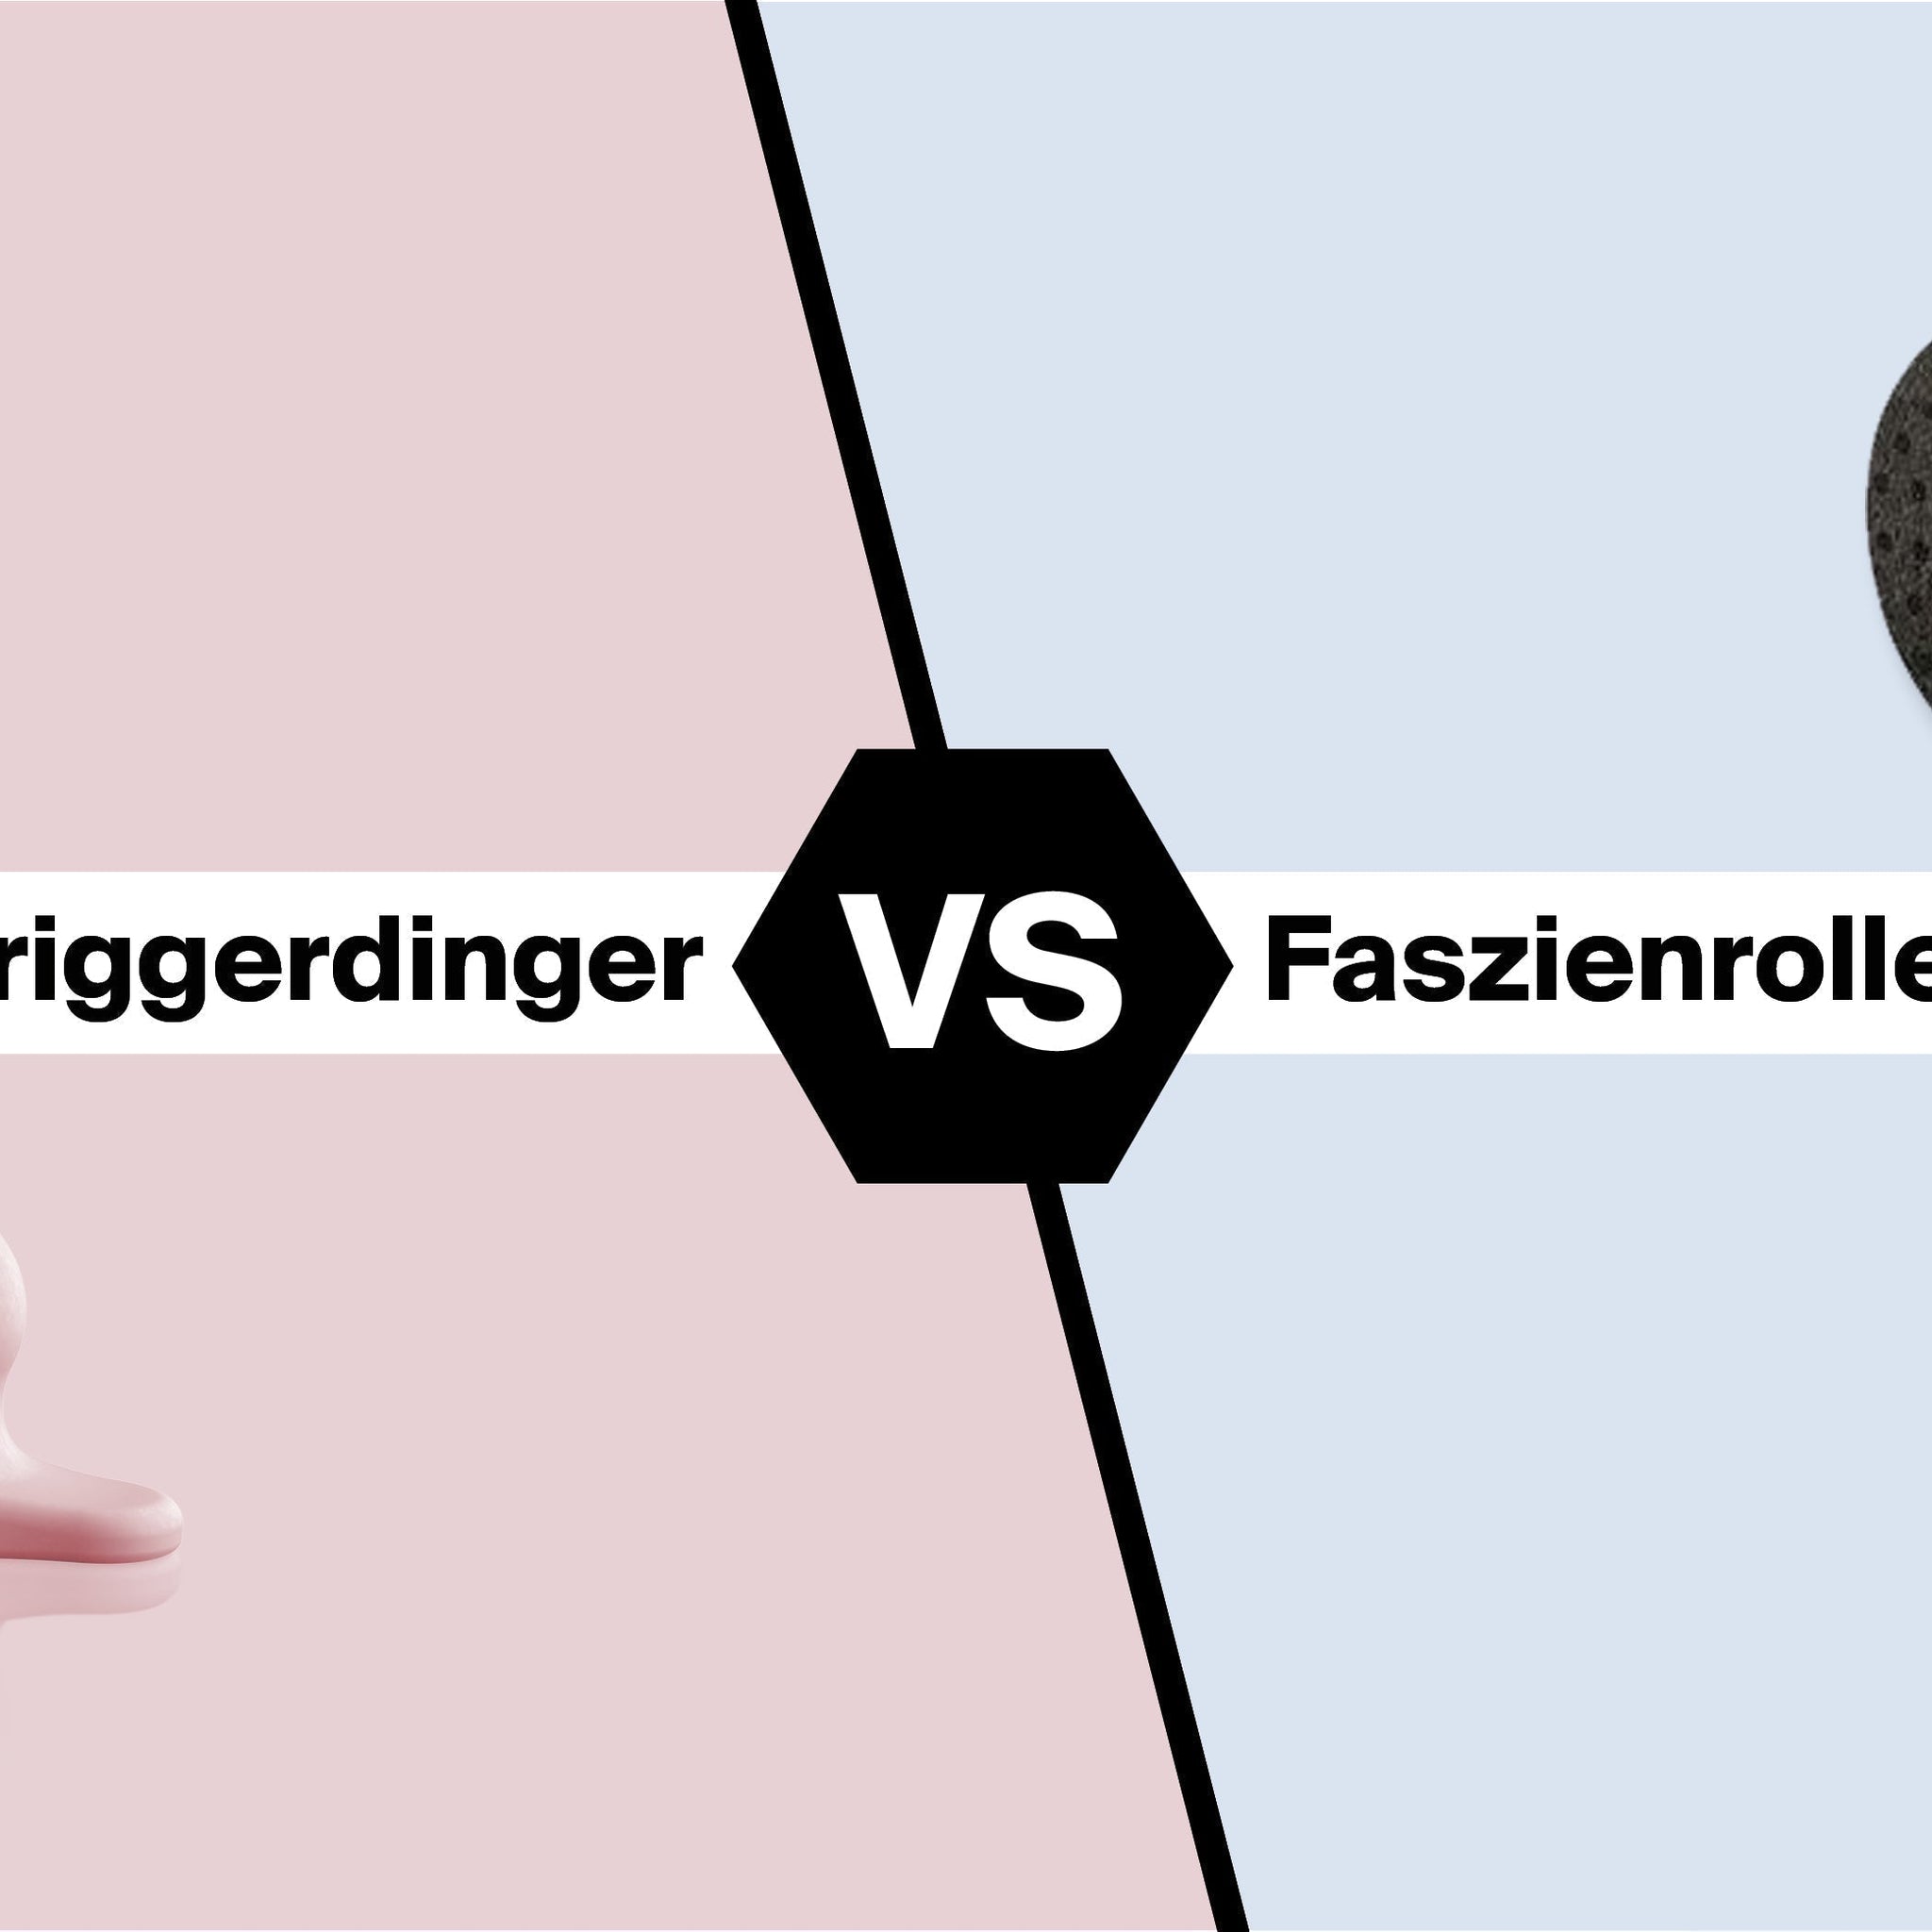 Triggerdinger® vs. Faszienrolle